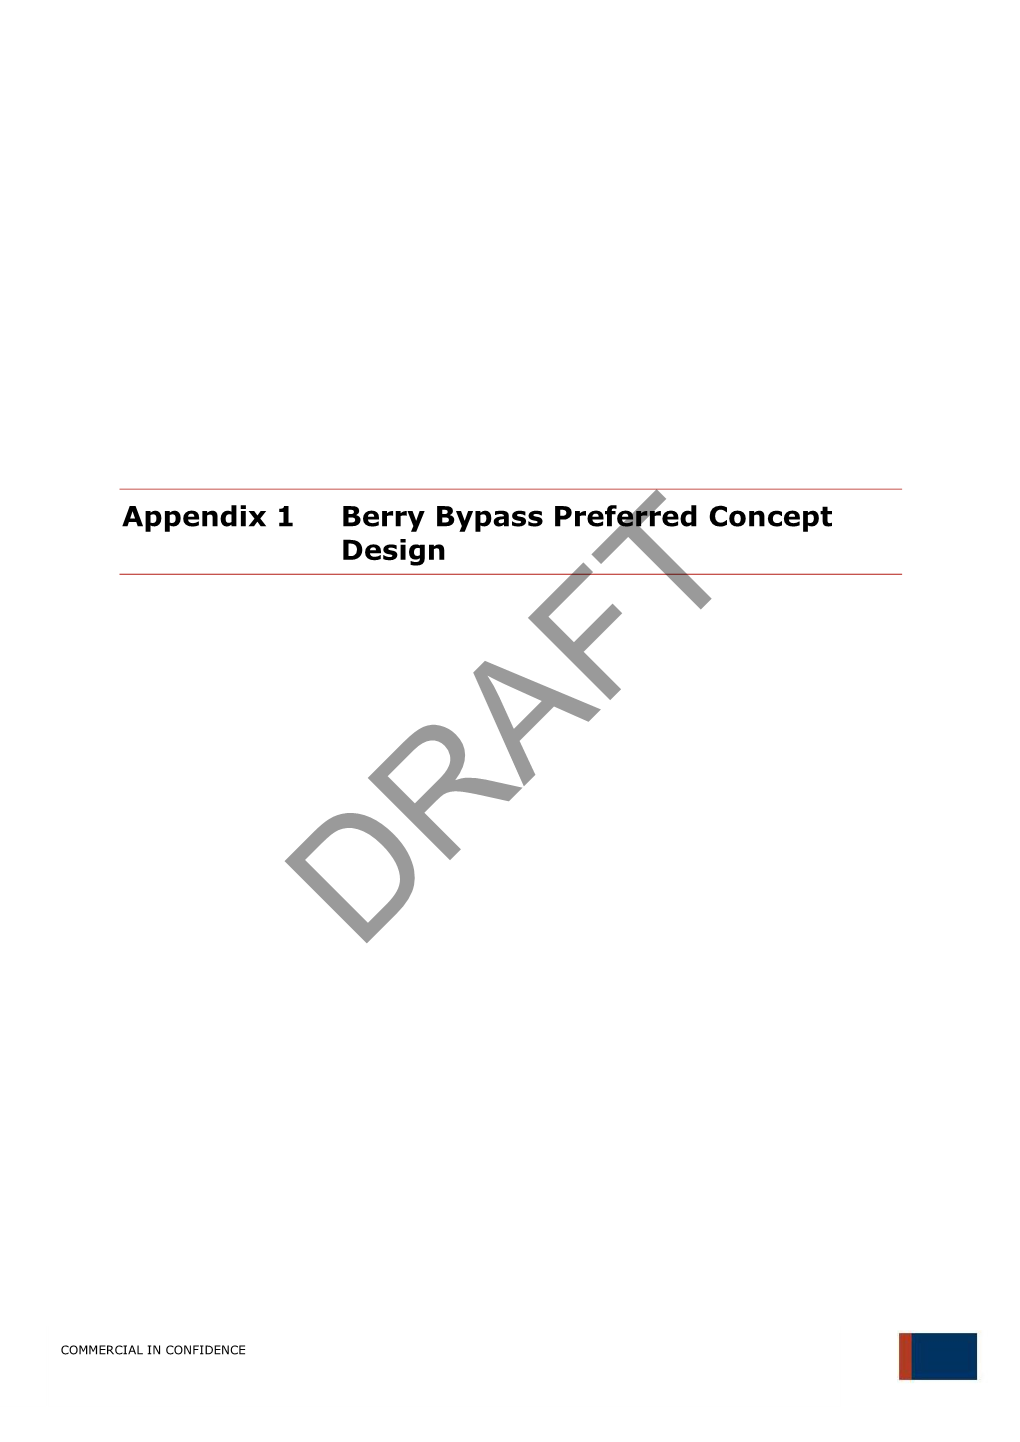 Appendix 1 Berry Bypass Preferred Concept Design